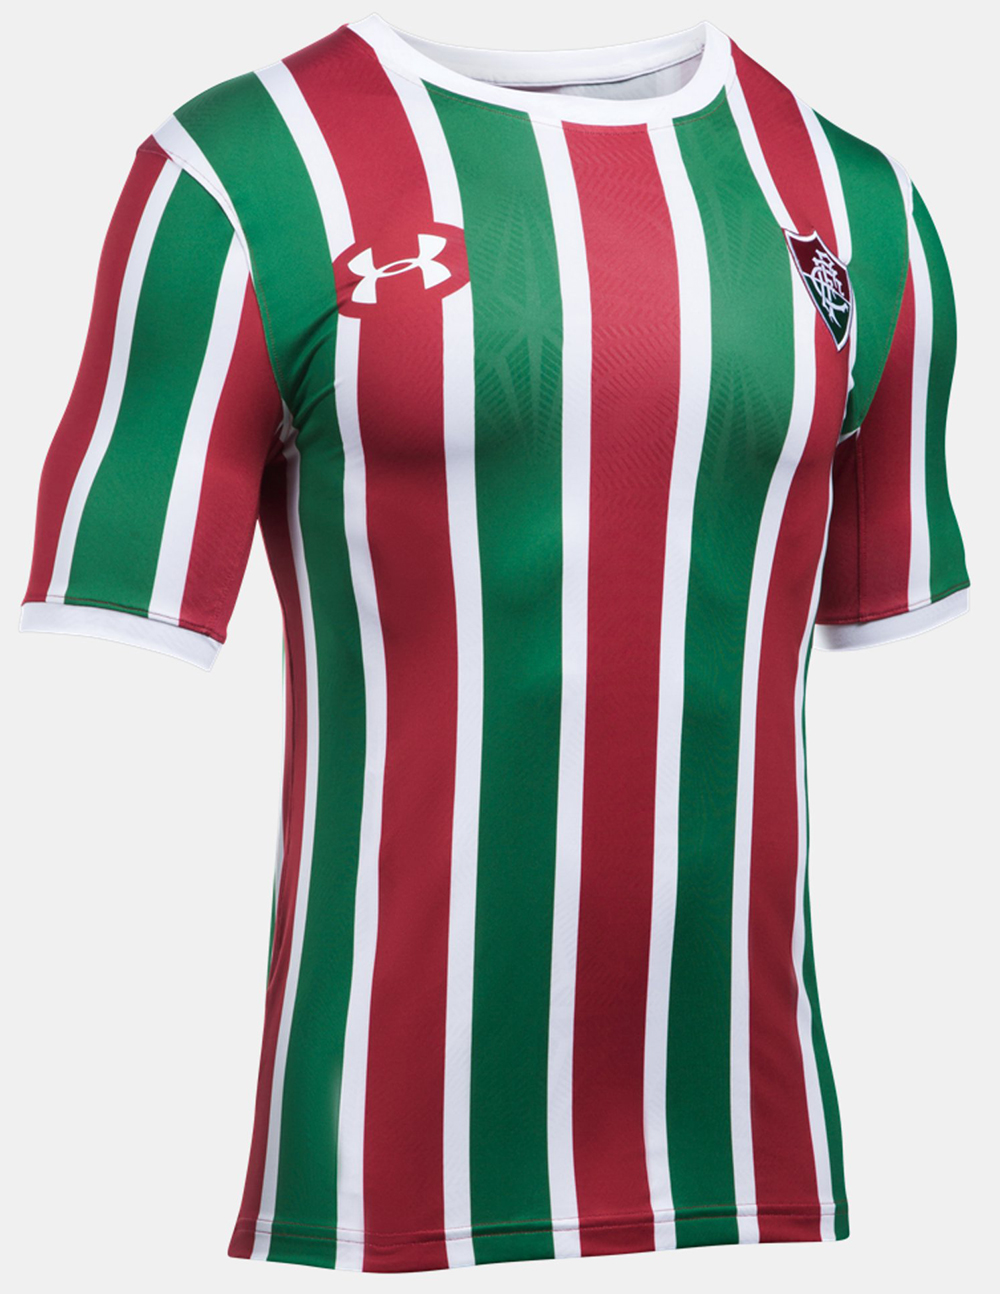 Camisas Under Armour do Fluminense 2017 18 local